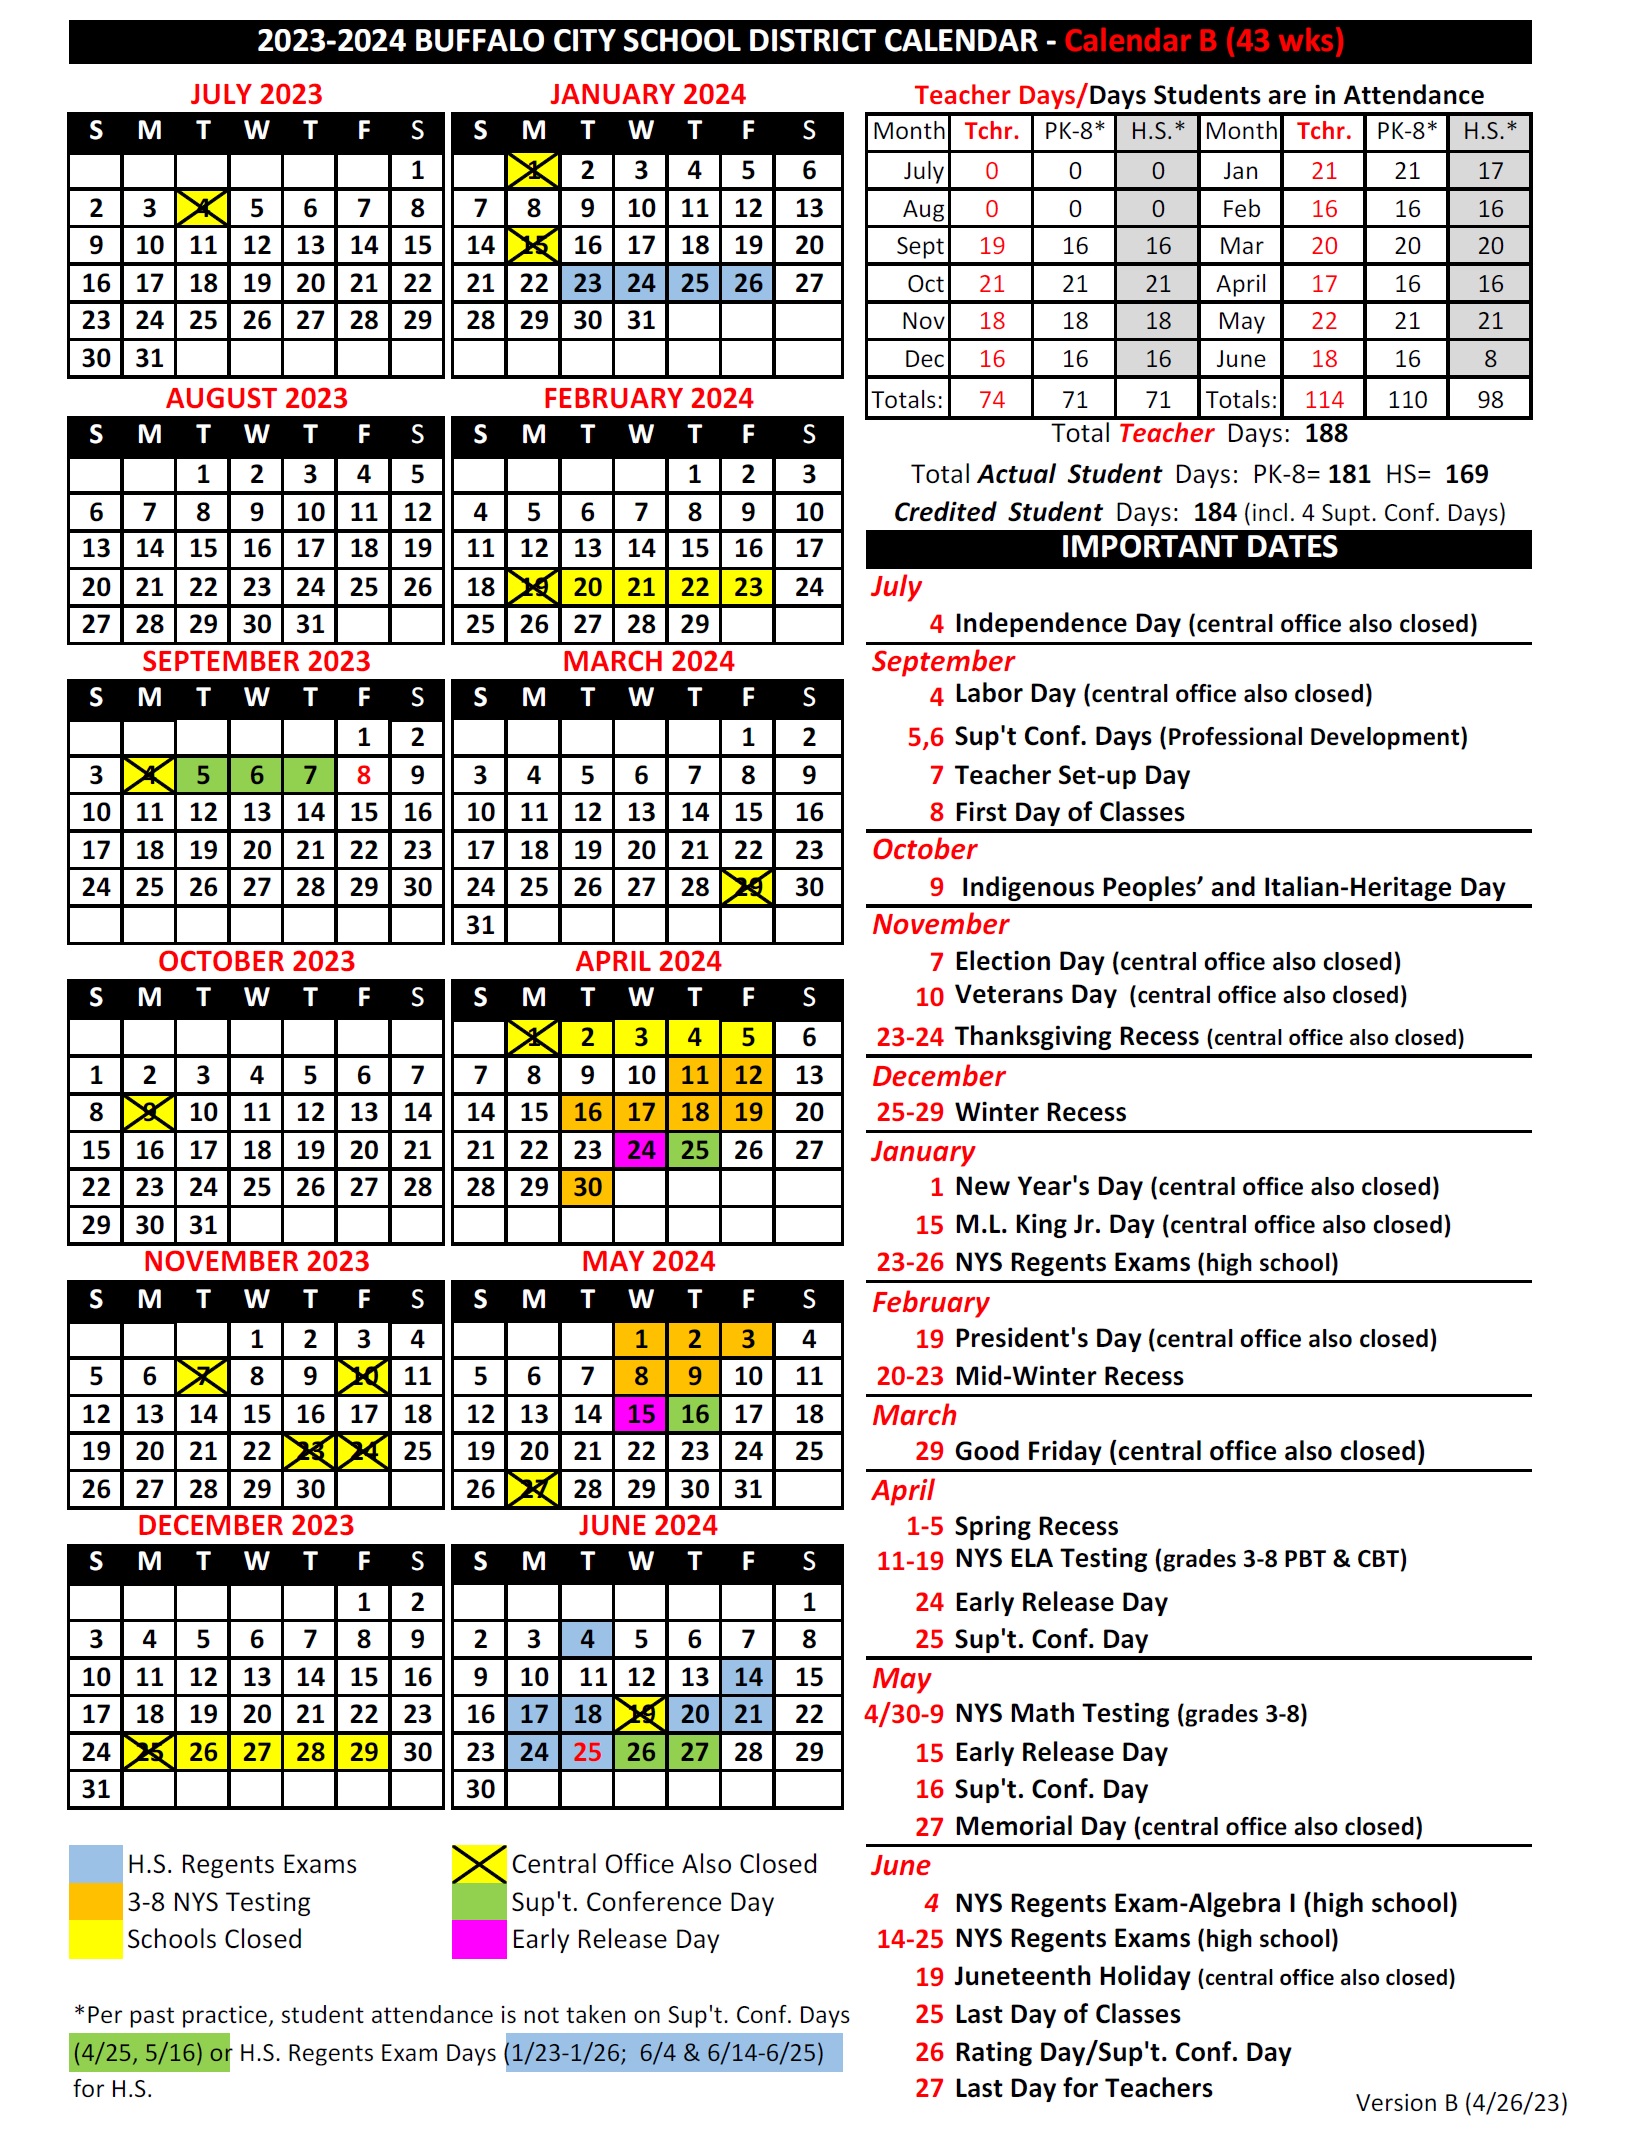 Buffalo Public Schools Calendar 2024 Caria Corrina